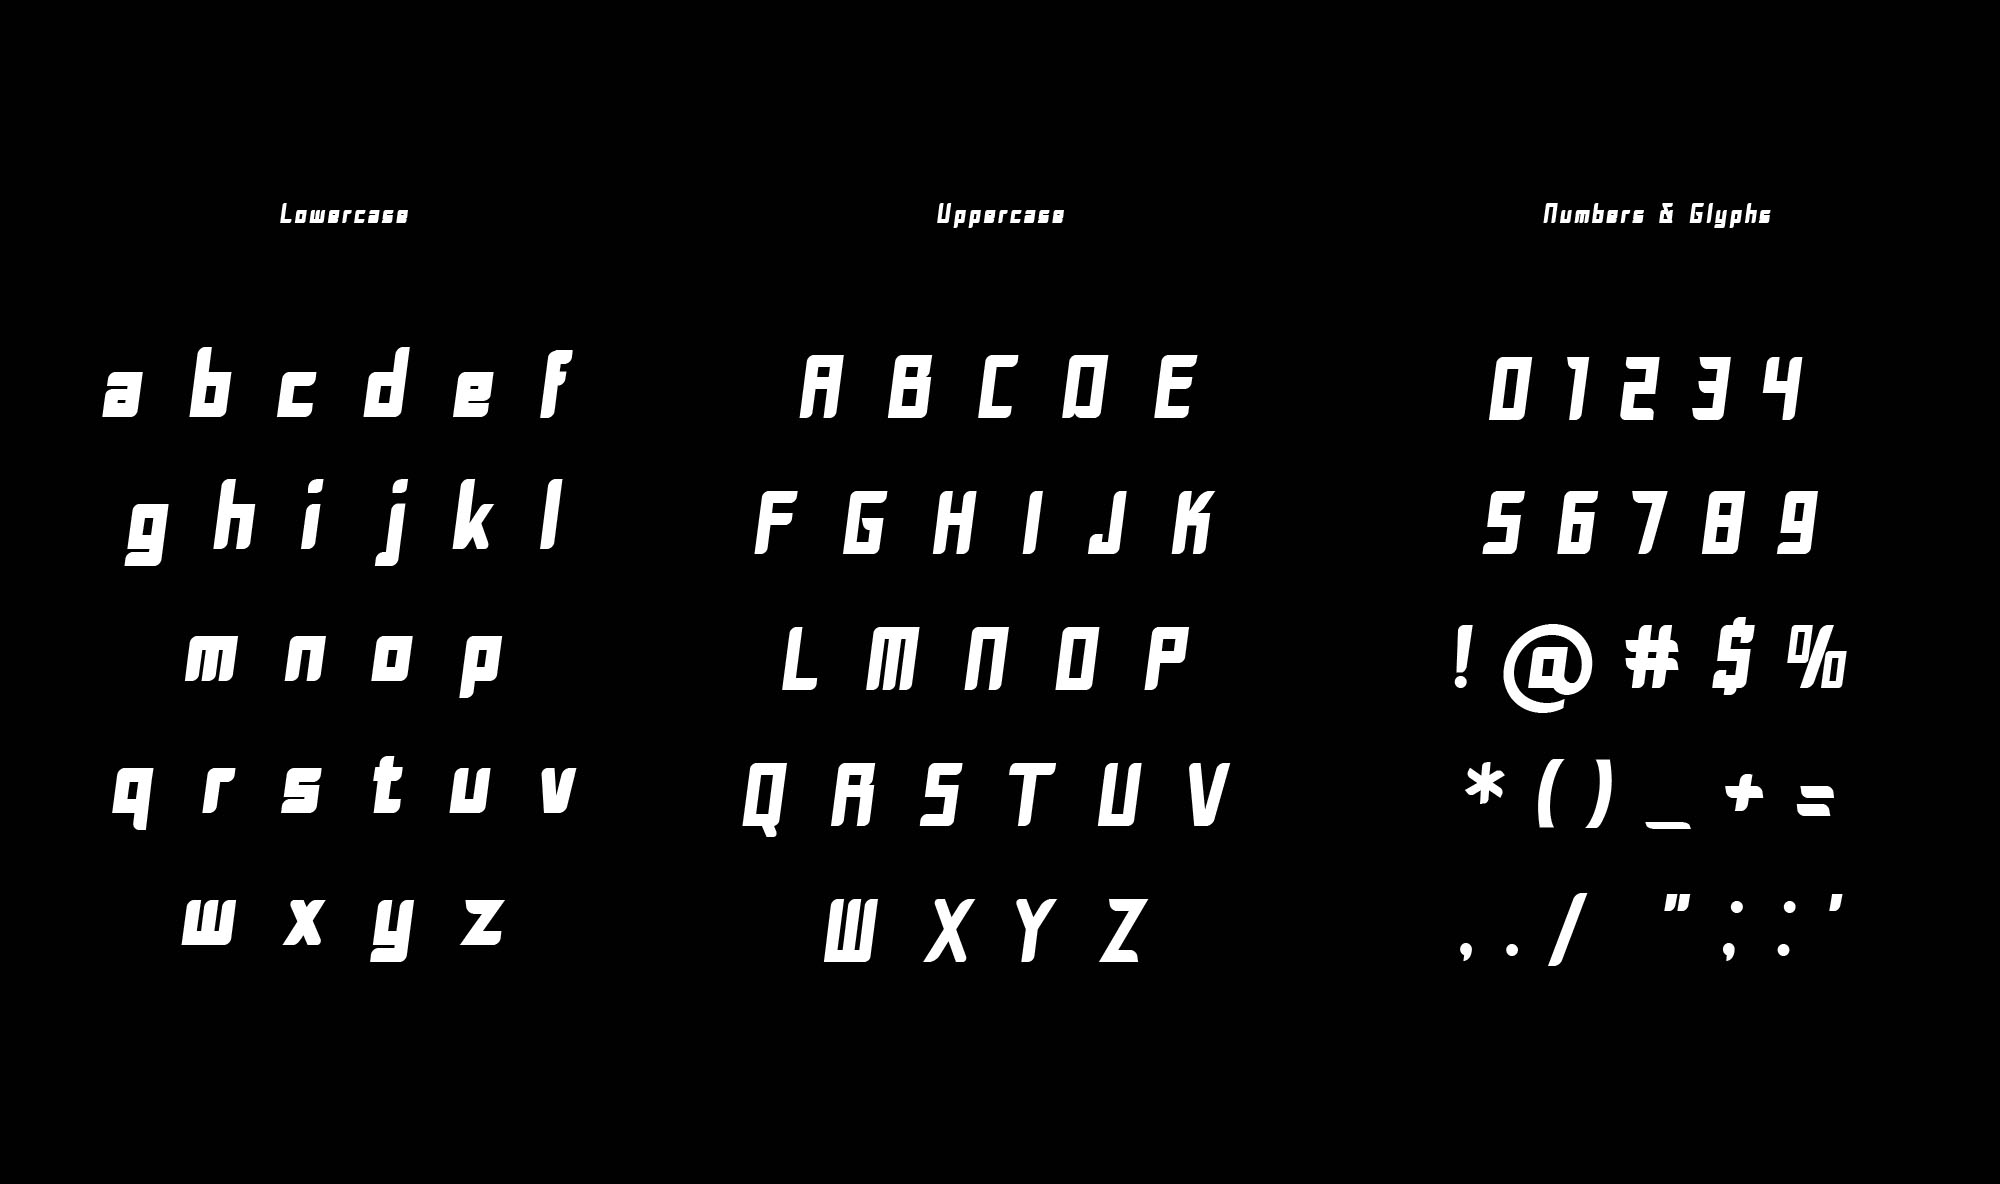 充满活力英文斜体无衬线字体 Tempo Energetic Typeface插图(2)